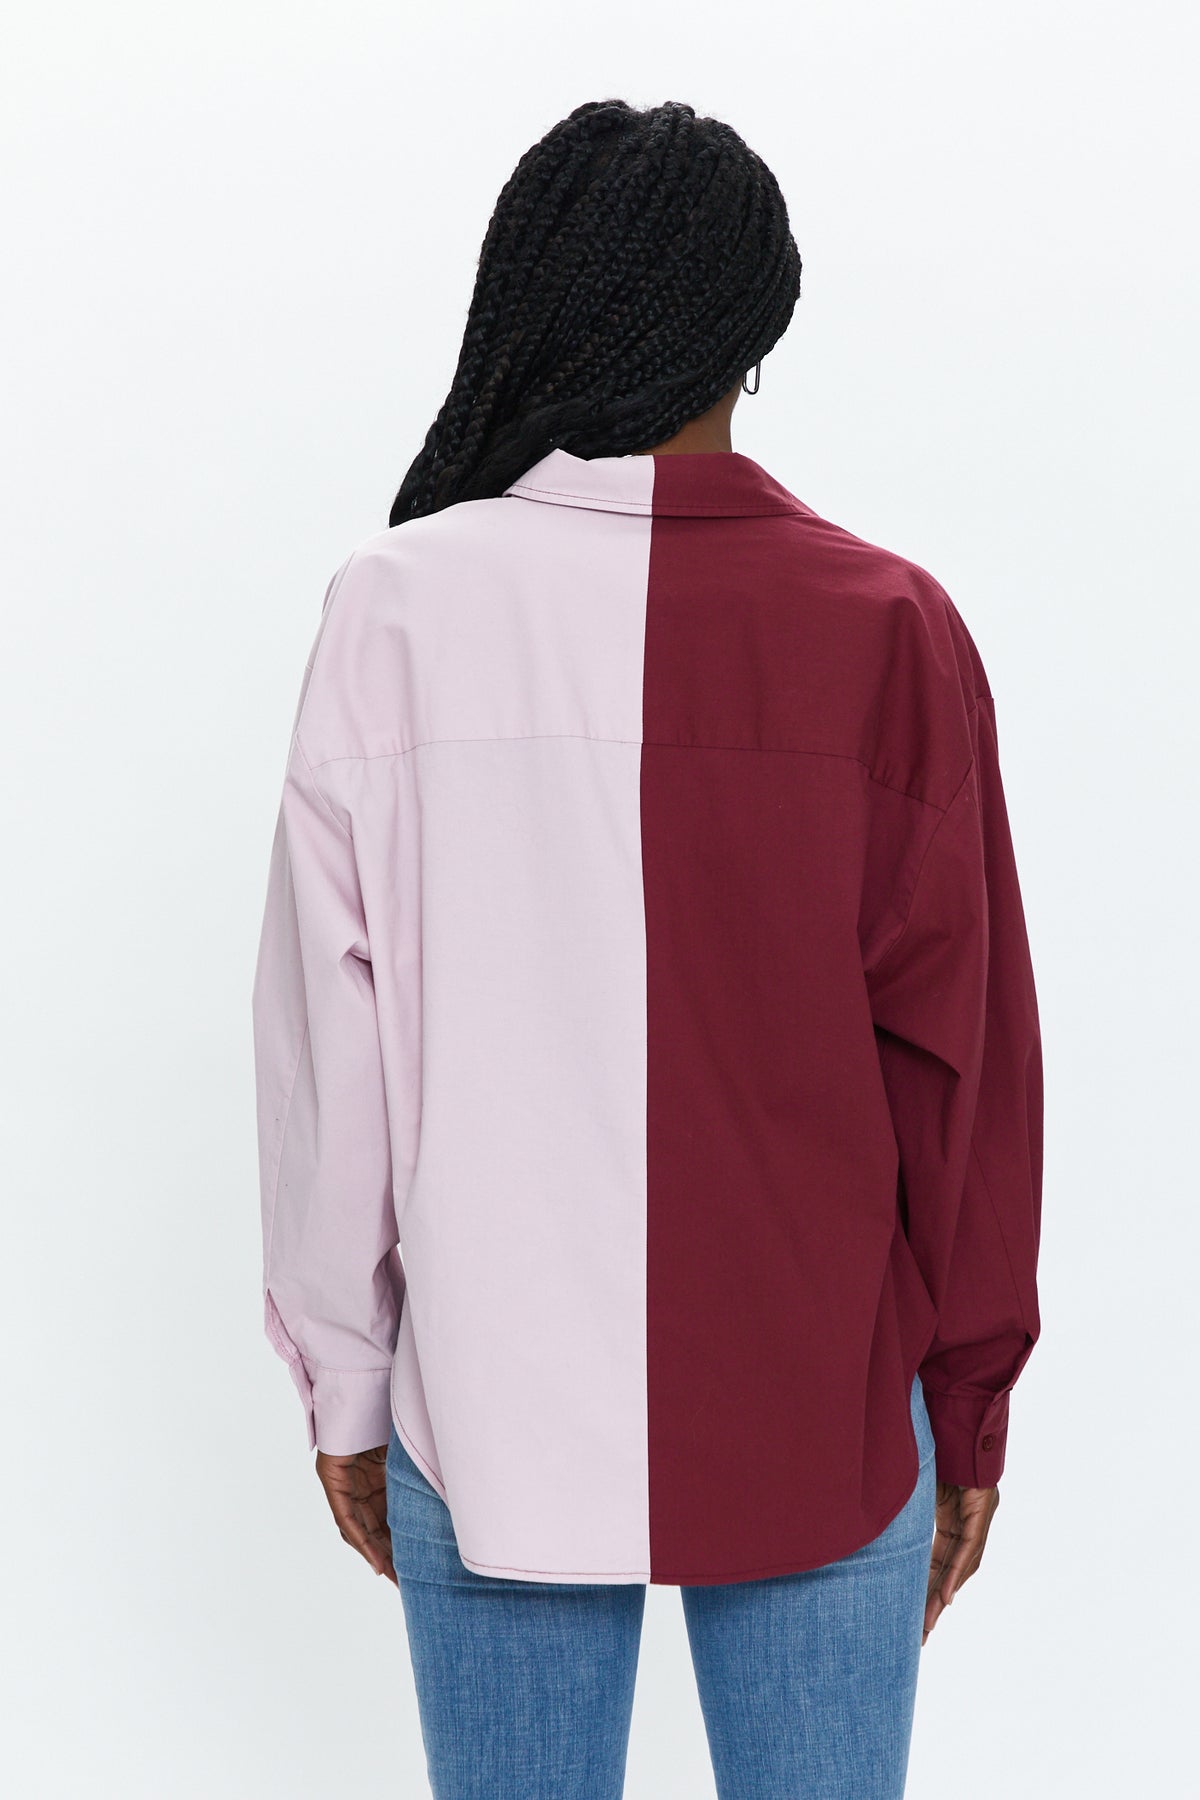 Sloane Oversized Button Down Shirt - Bordeaux Pink Split